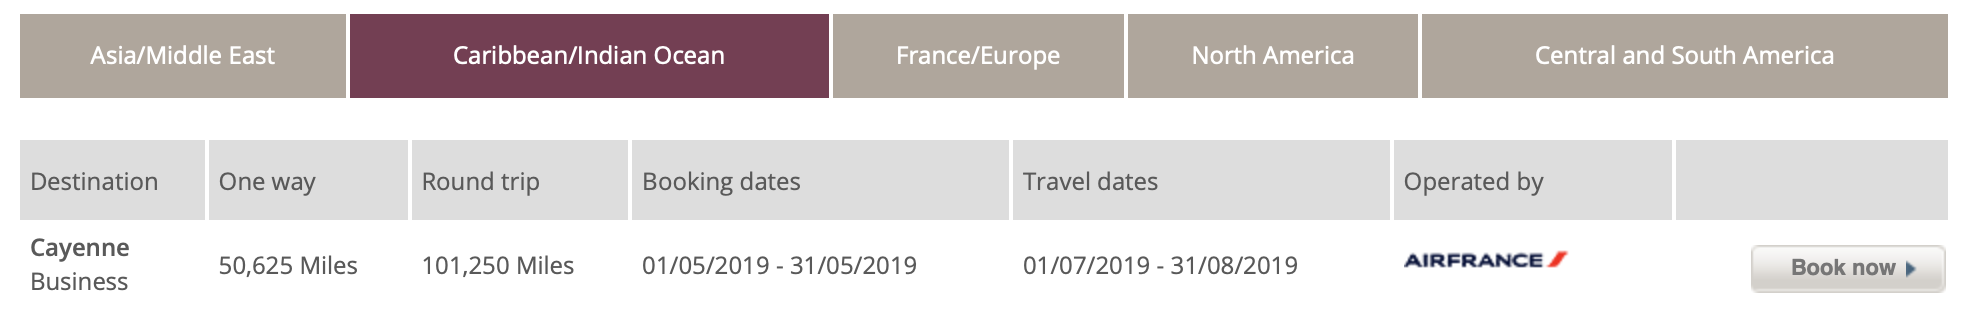 a screenshot of a travel date